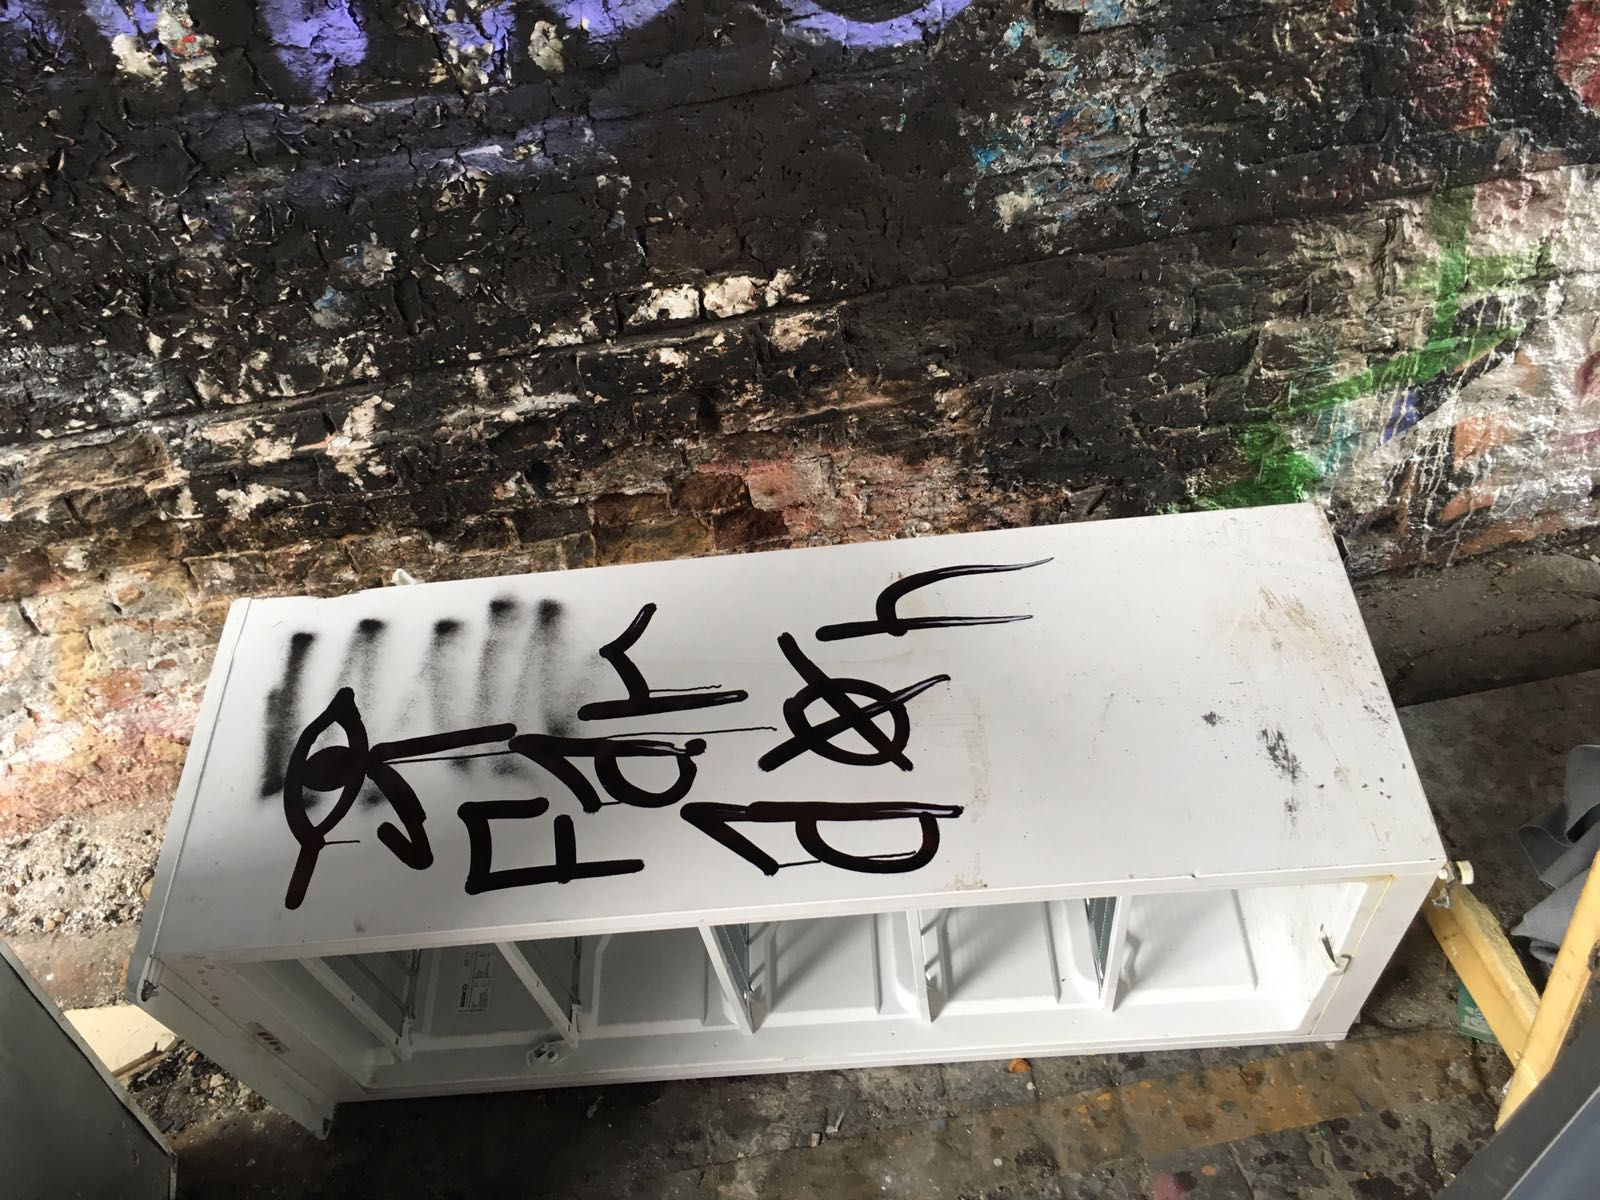 Findaskip dumped fridge with graffiti